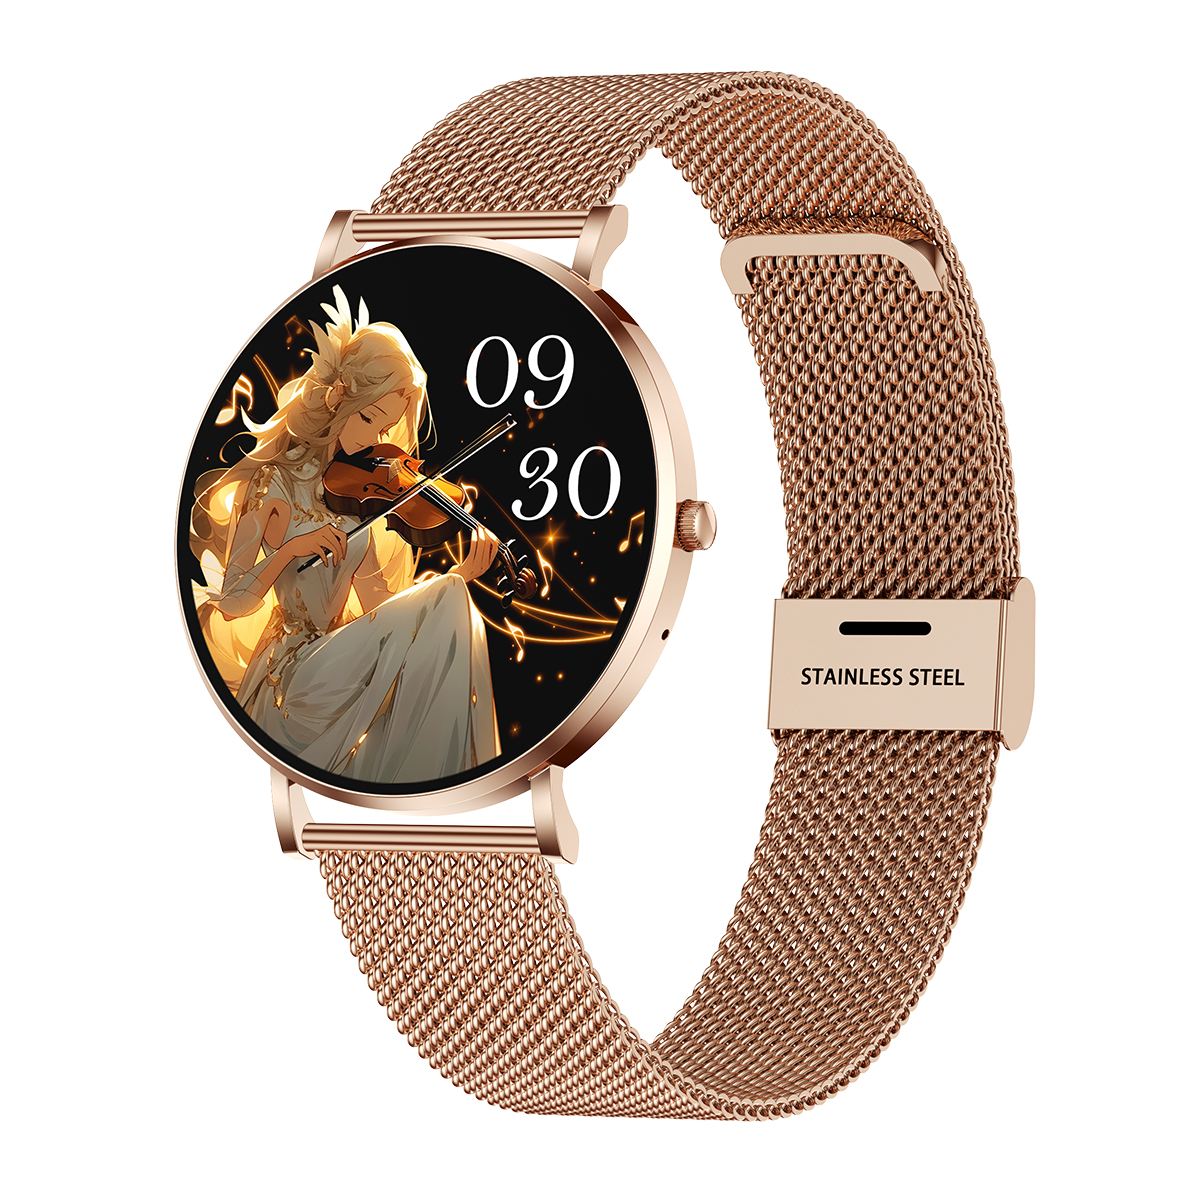 Ultra-thin 6.5MM Smart Watch for Women (Answer/Make Calls),1.32